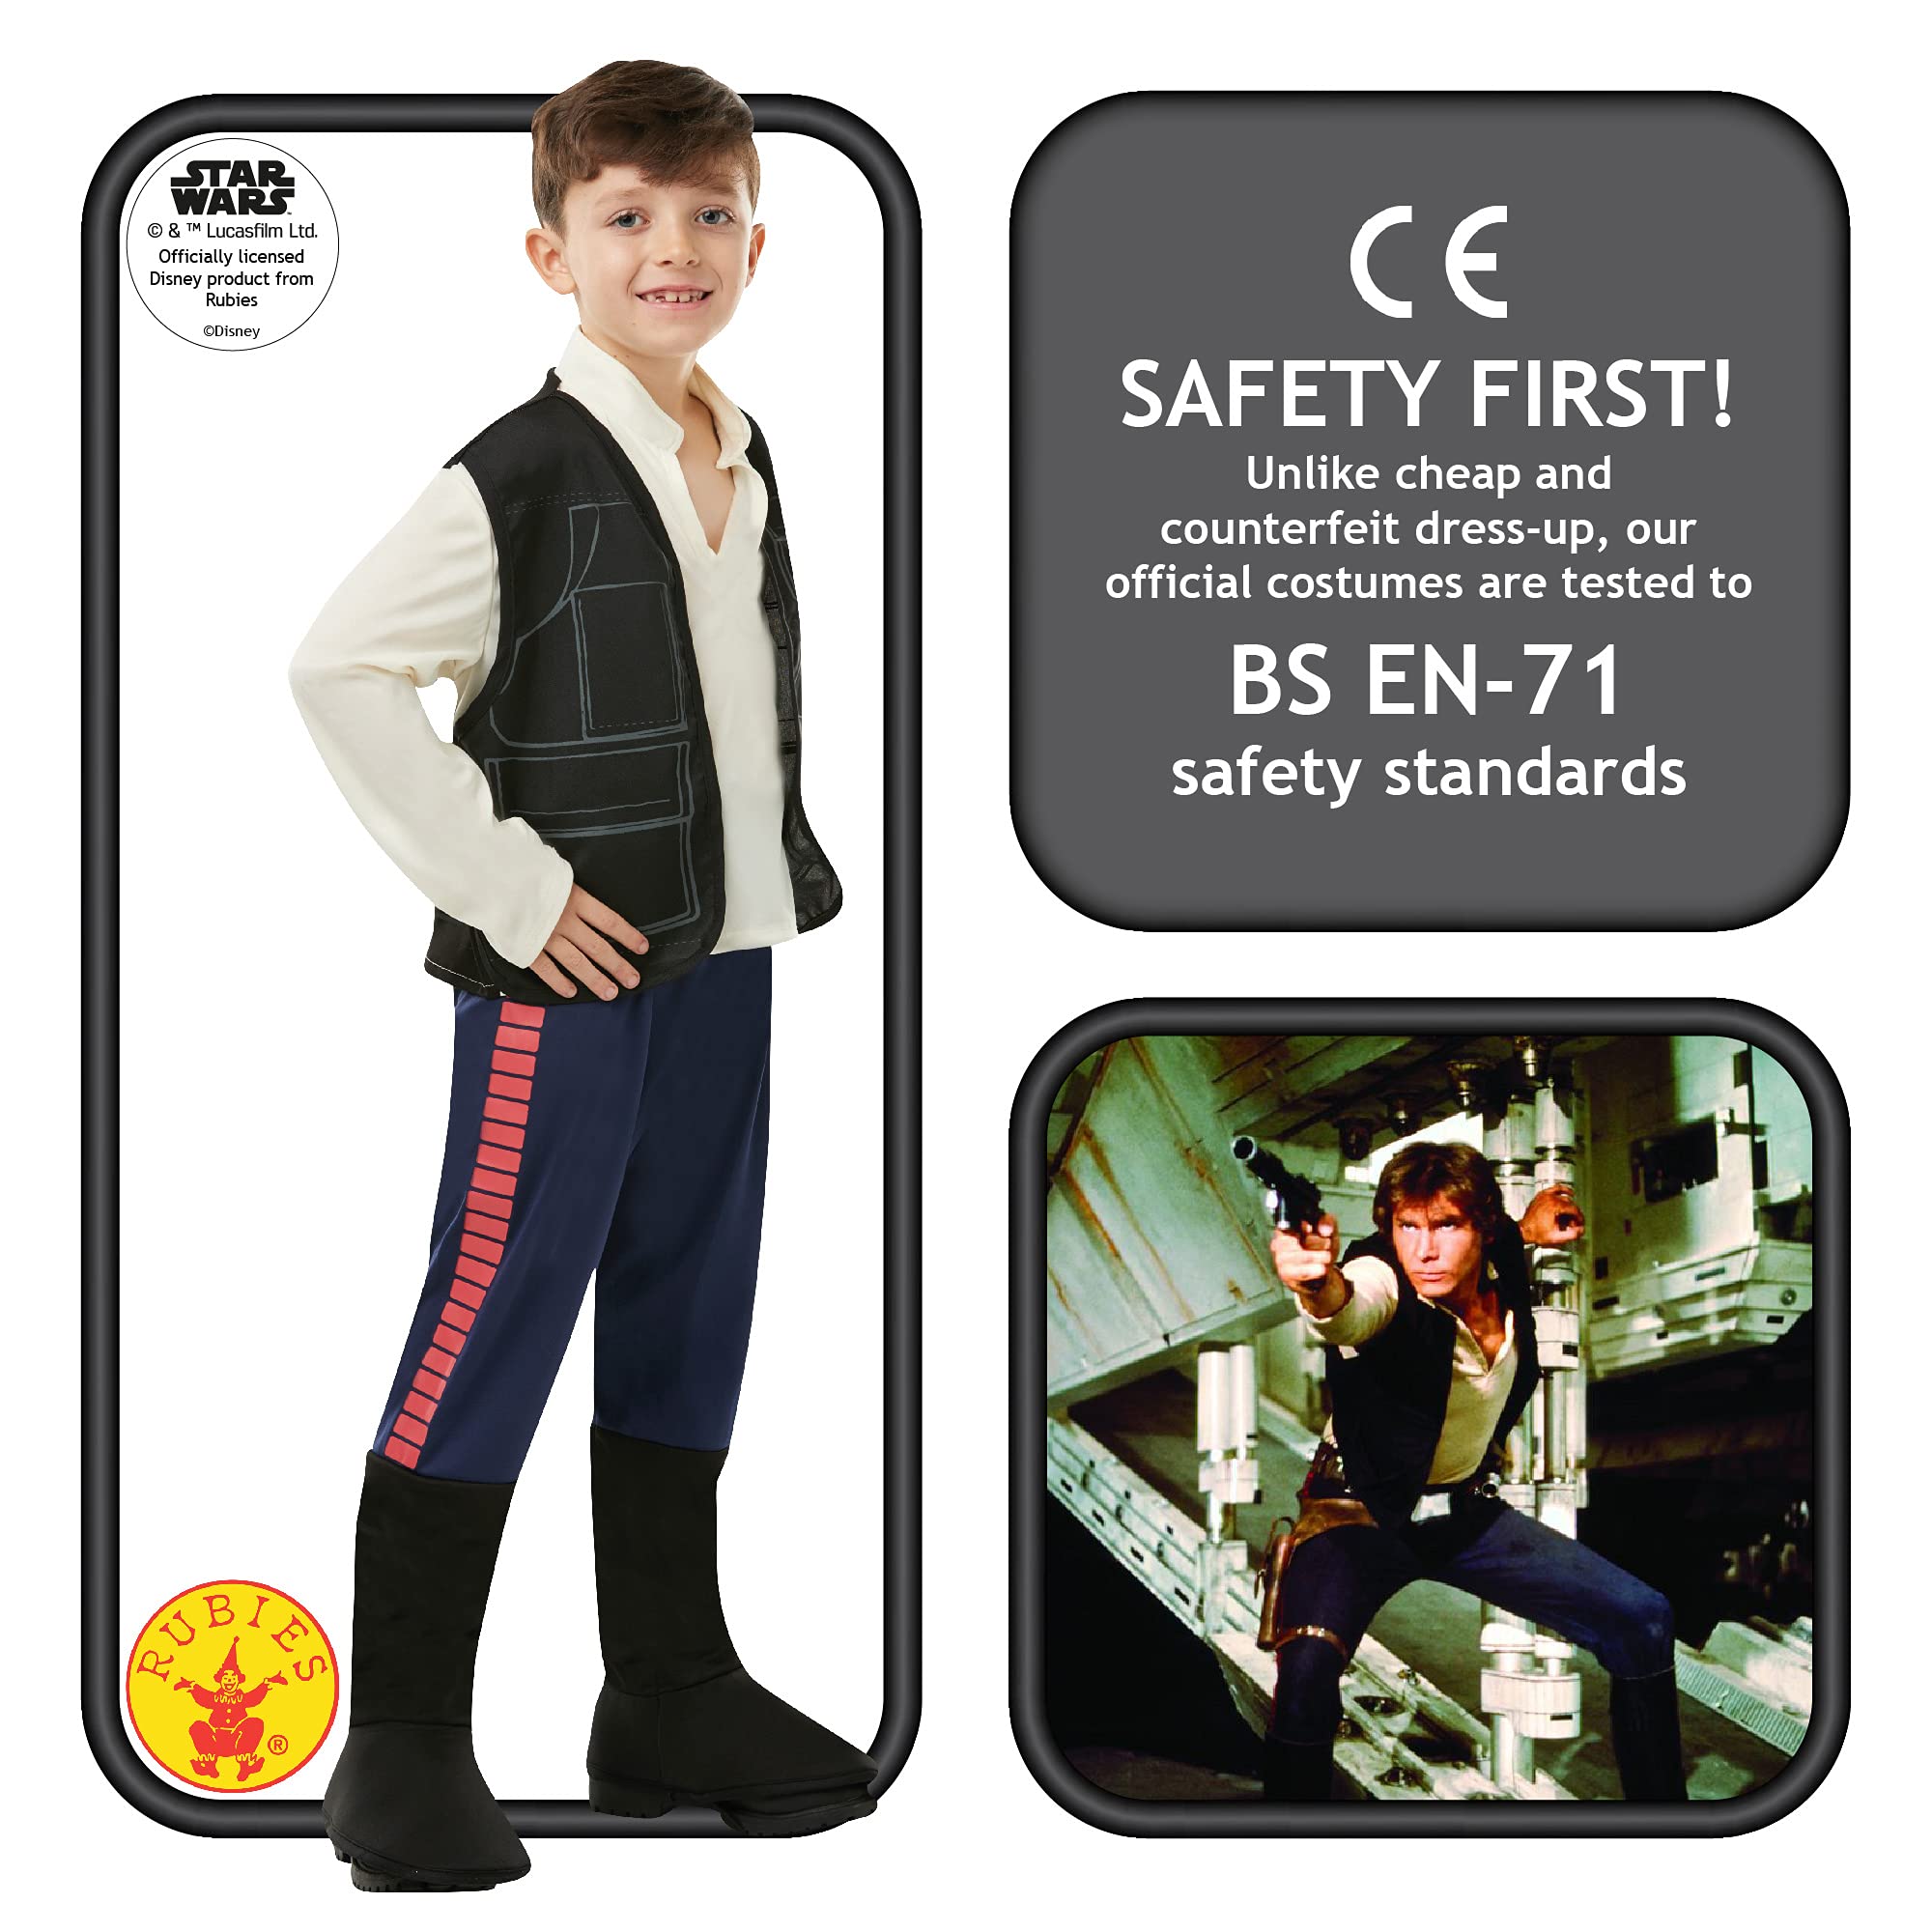 Rubie's Star Wars Classic Child's Han Solo Costume, Small Black